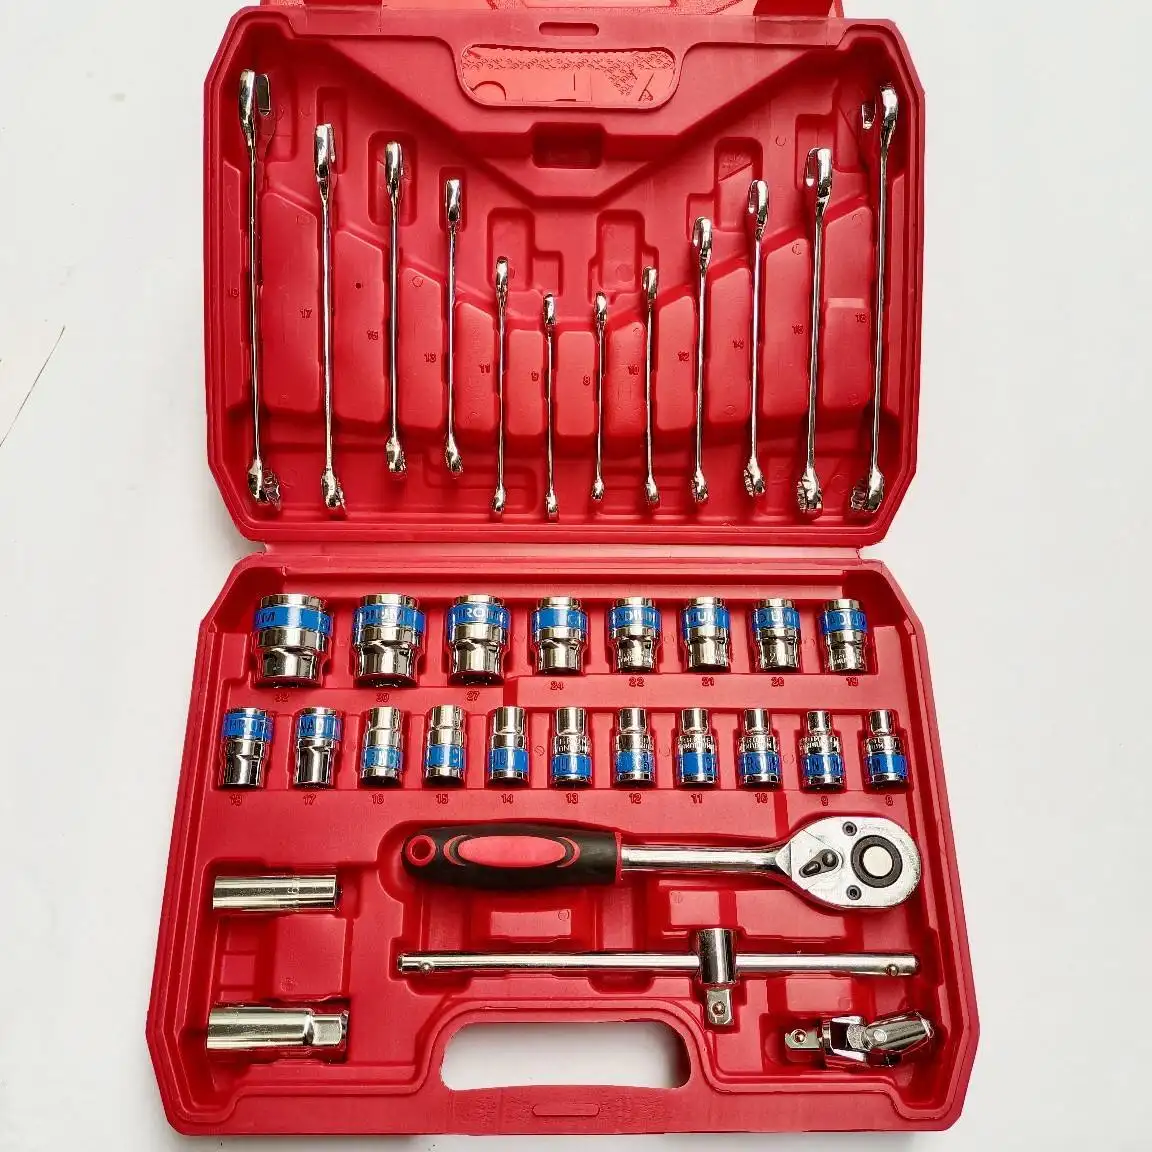 Sleeve set socket wrench spark plug tool set for auto repair tool kit professional box power tools set box